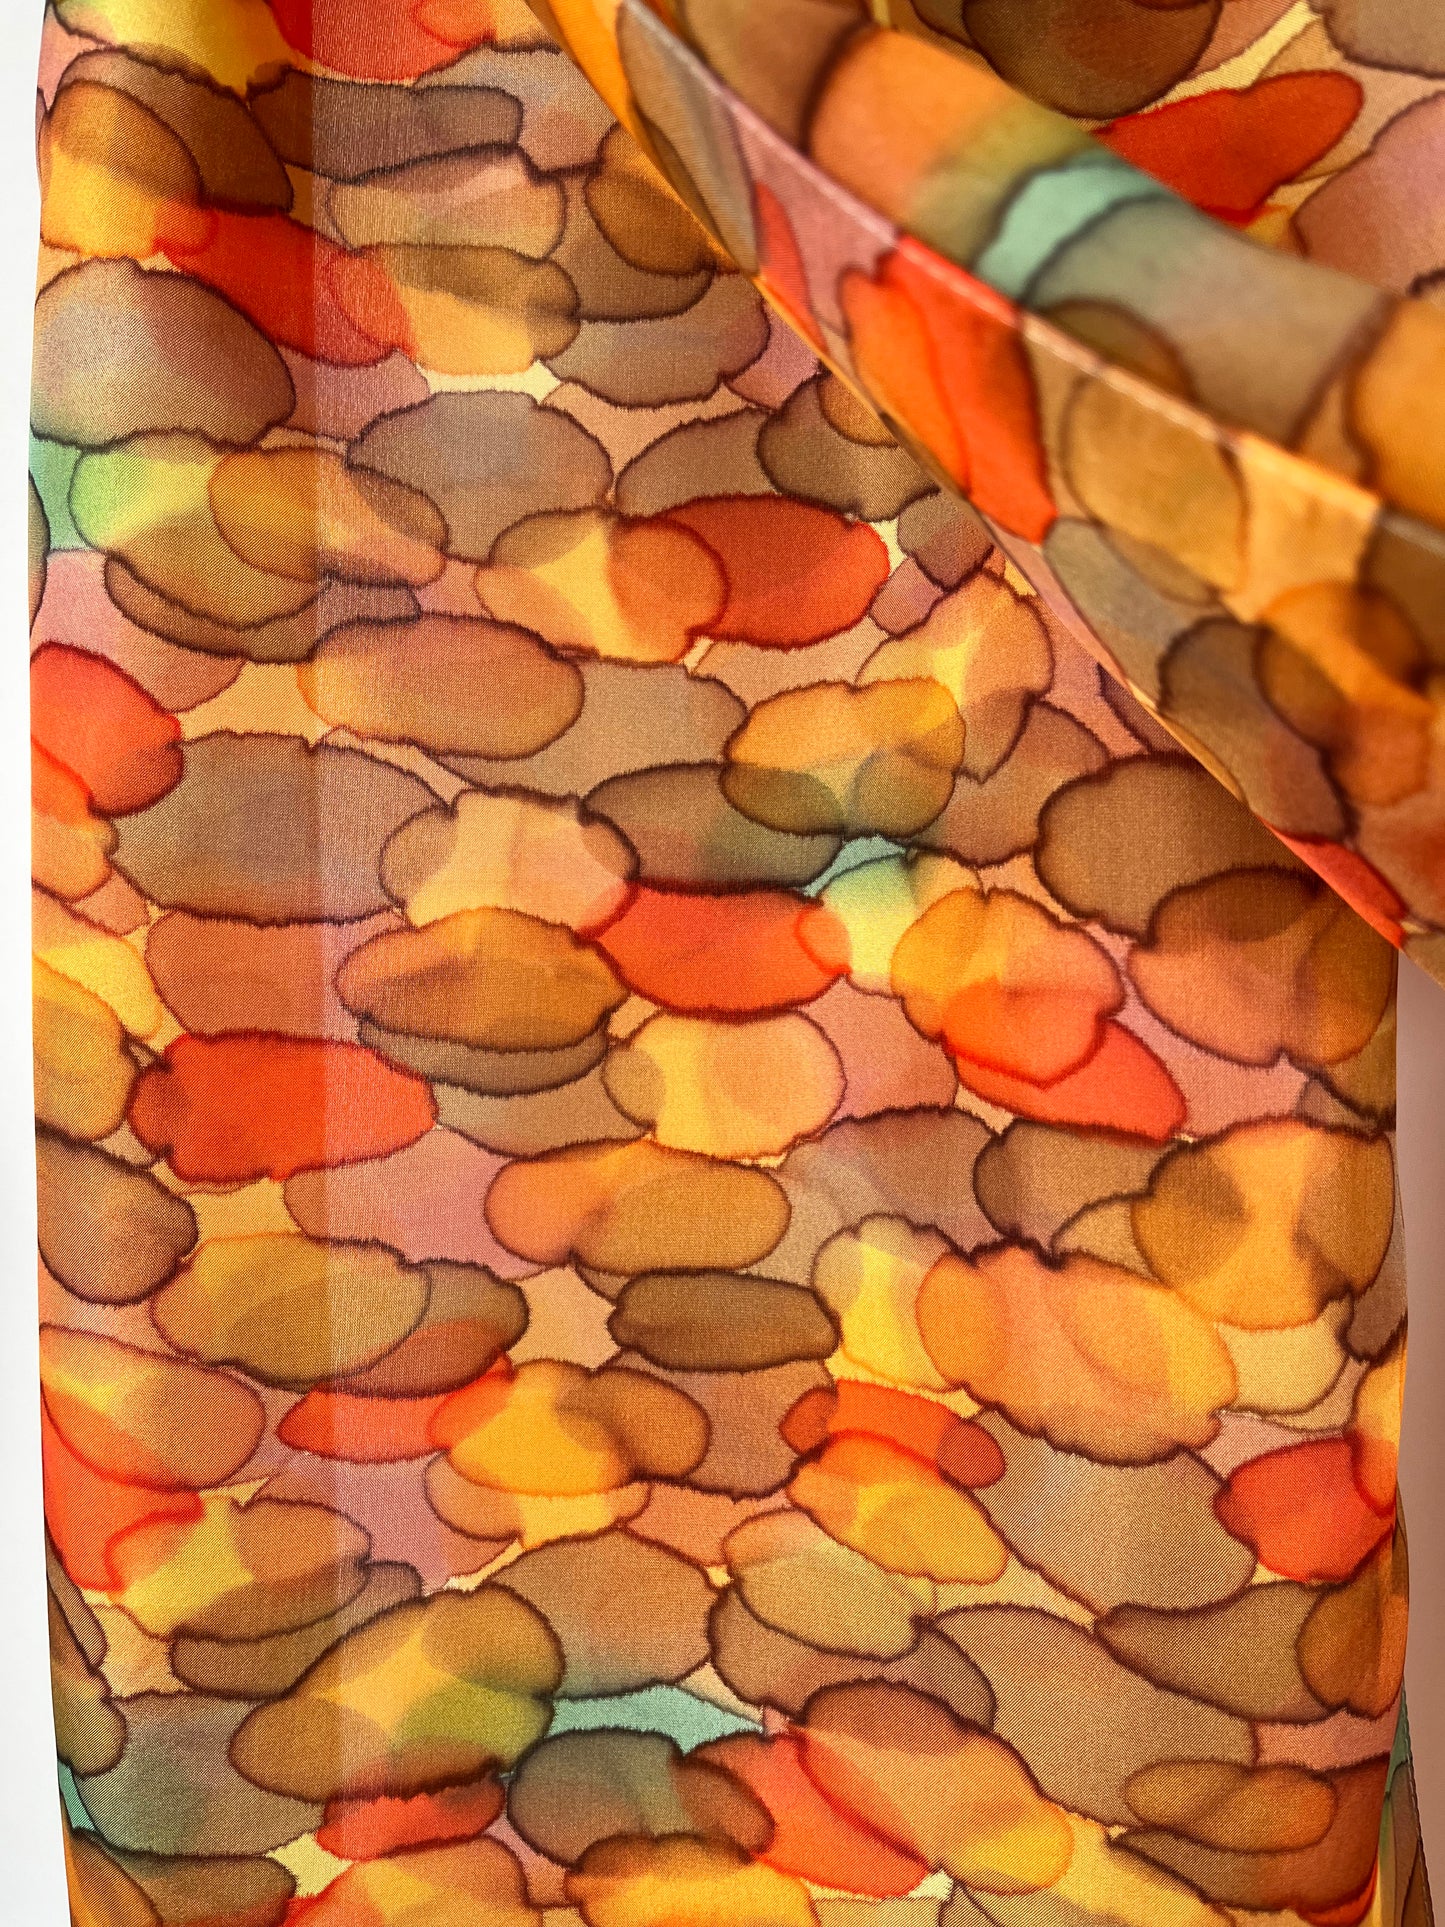 "Autumn Woods" - Hand-dyed Silk Scarf - $125